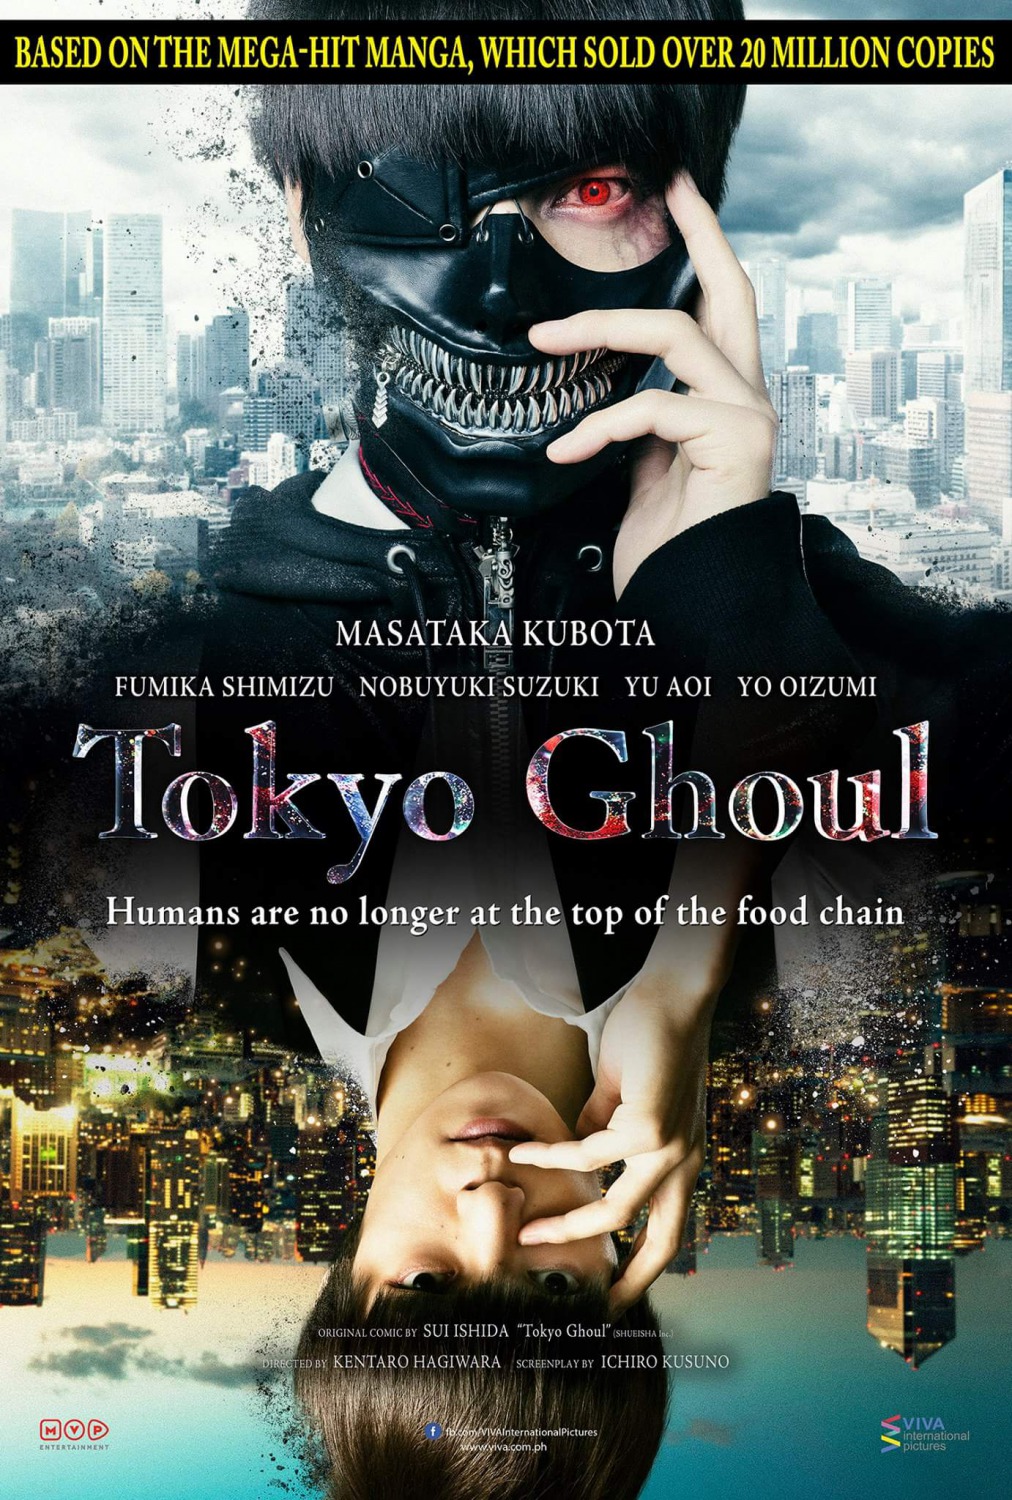 Extra Large Movie Poster Image for Tôkyô gûru (#1 of 3)